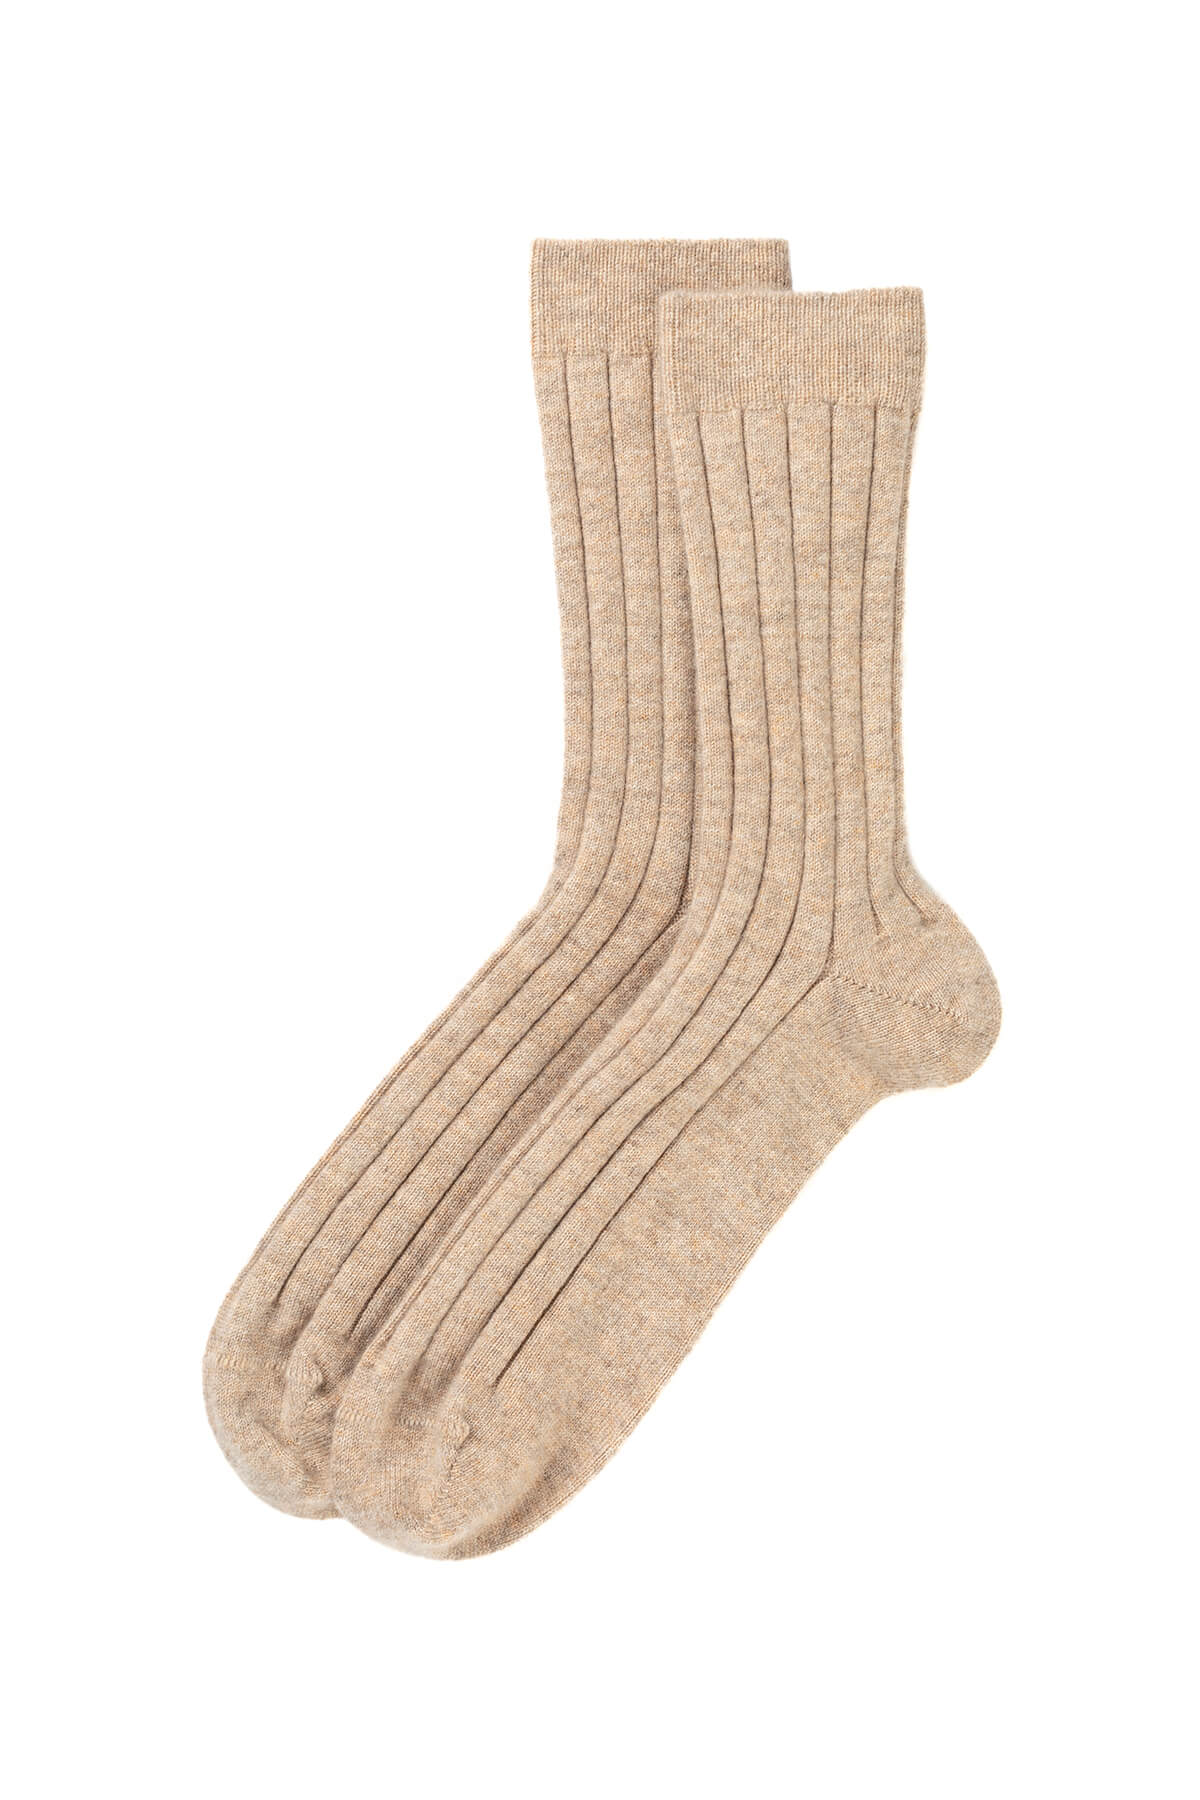 Johnstons of Elgin’s Oatmeal Men's Cashmere Ribbed Socks on a white background HBN01009HB0210